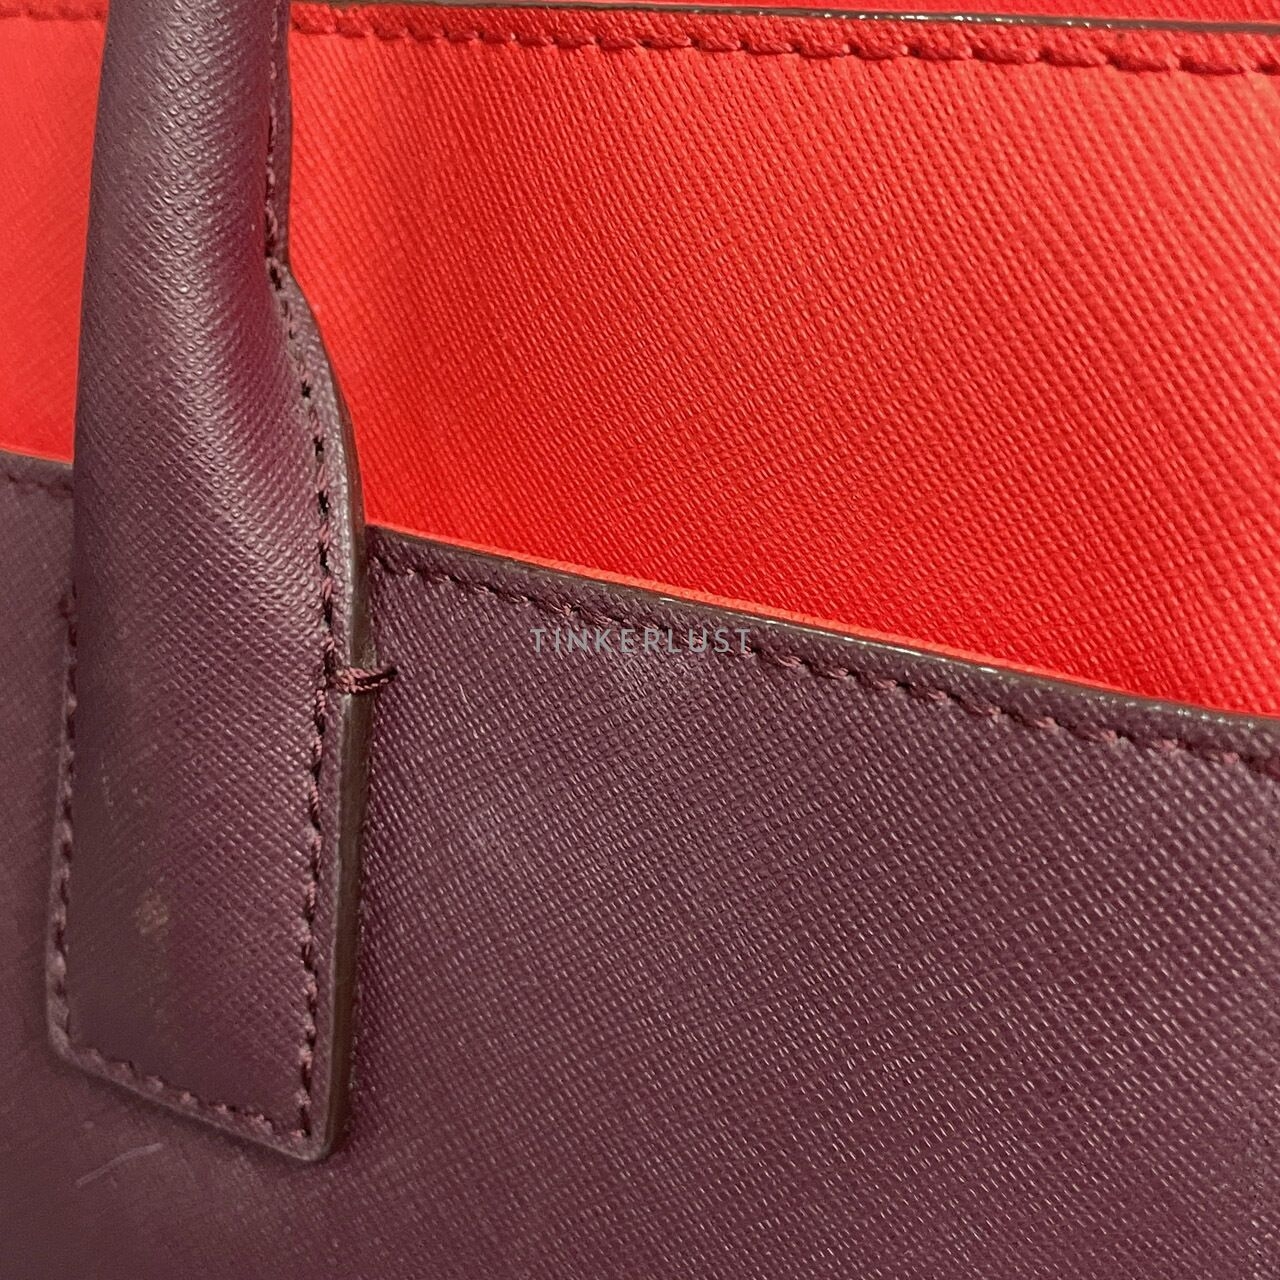 Kate Spade Cameron Street Candace Colorblock Red Handbag